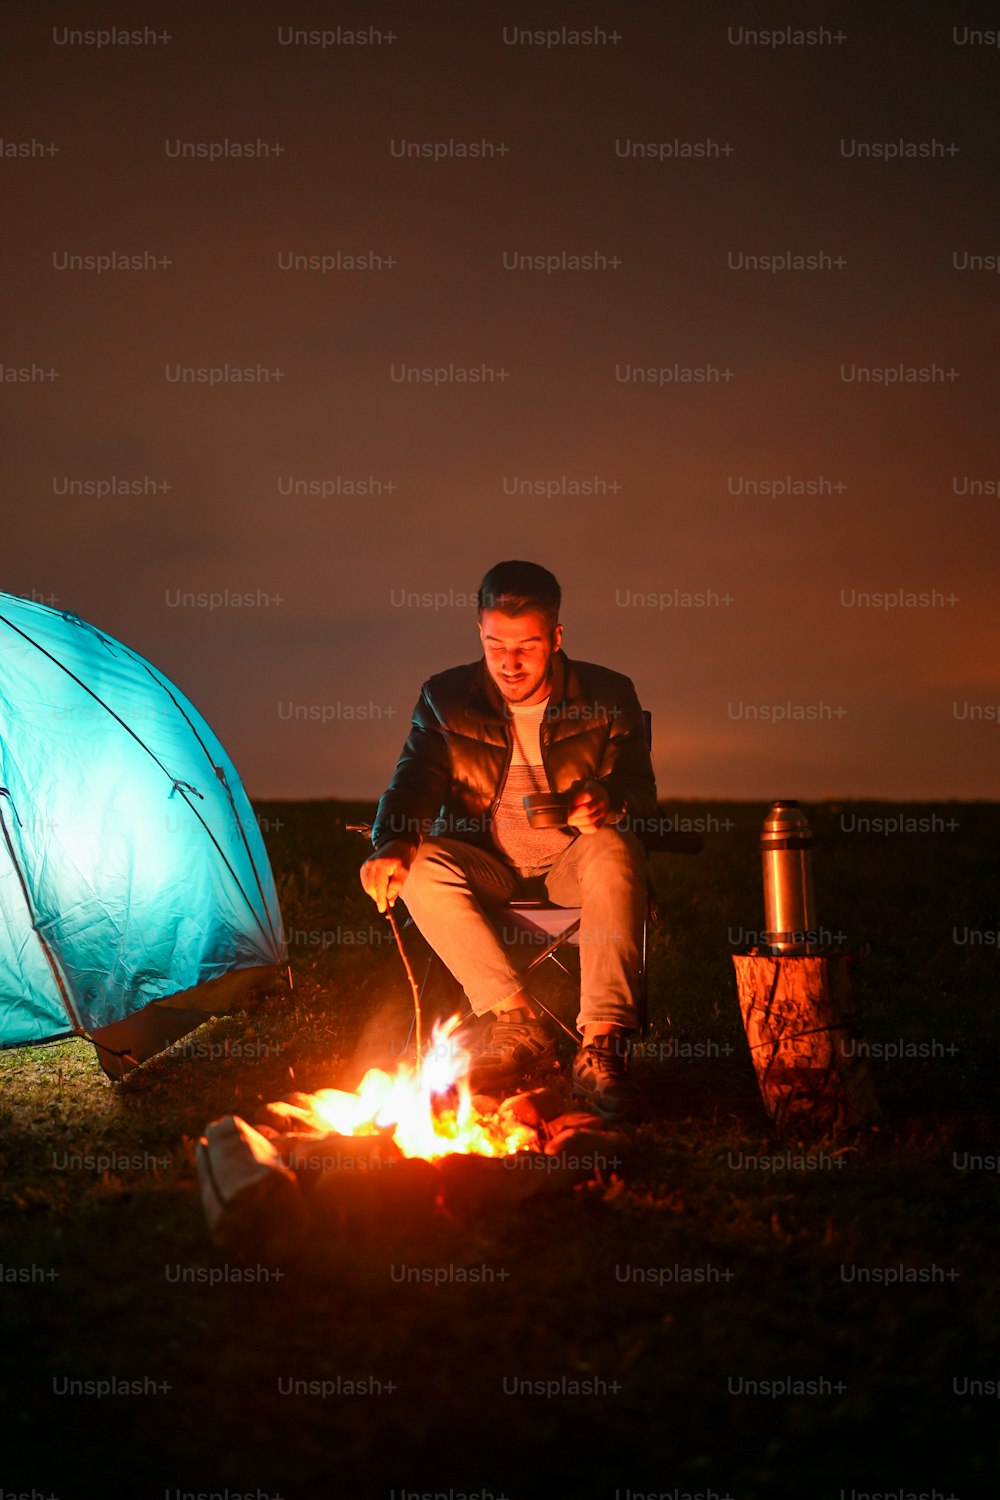 Un uomo seduto davanti a un falò accanto a una tenda